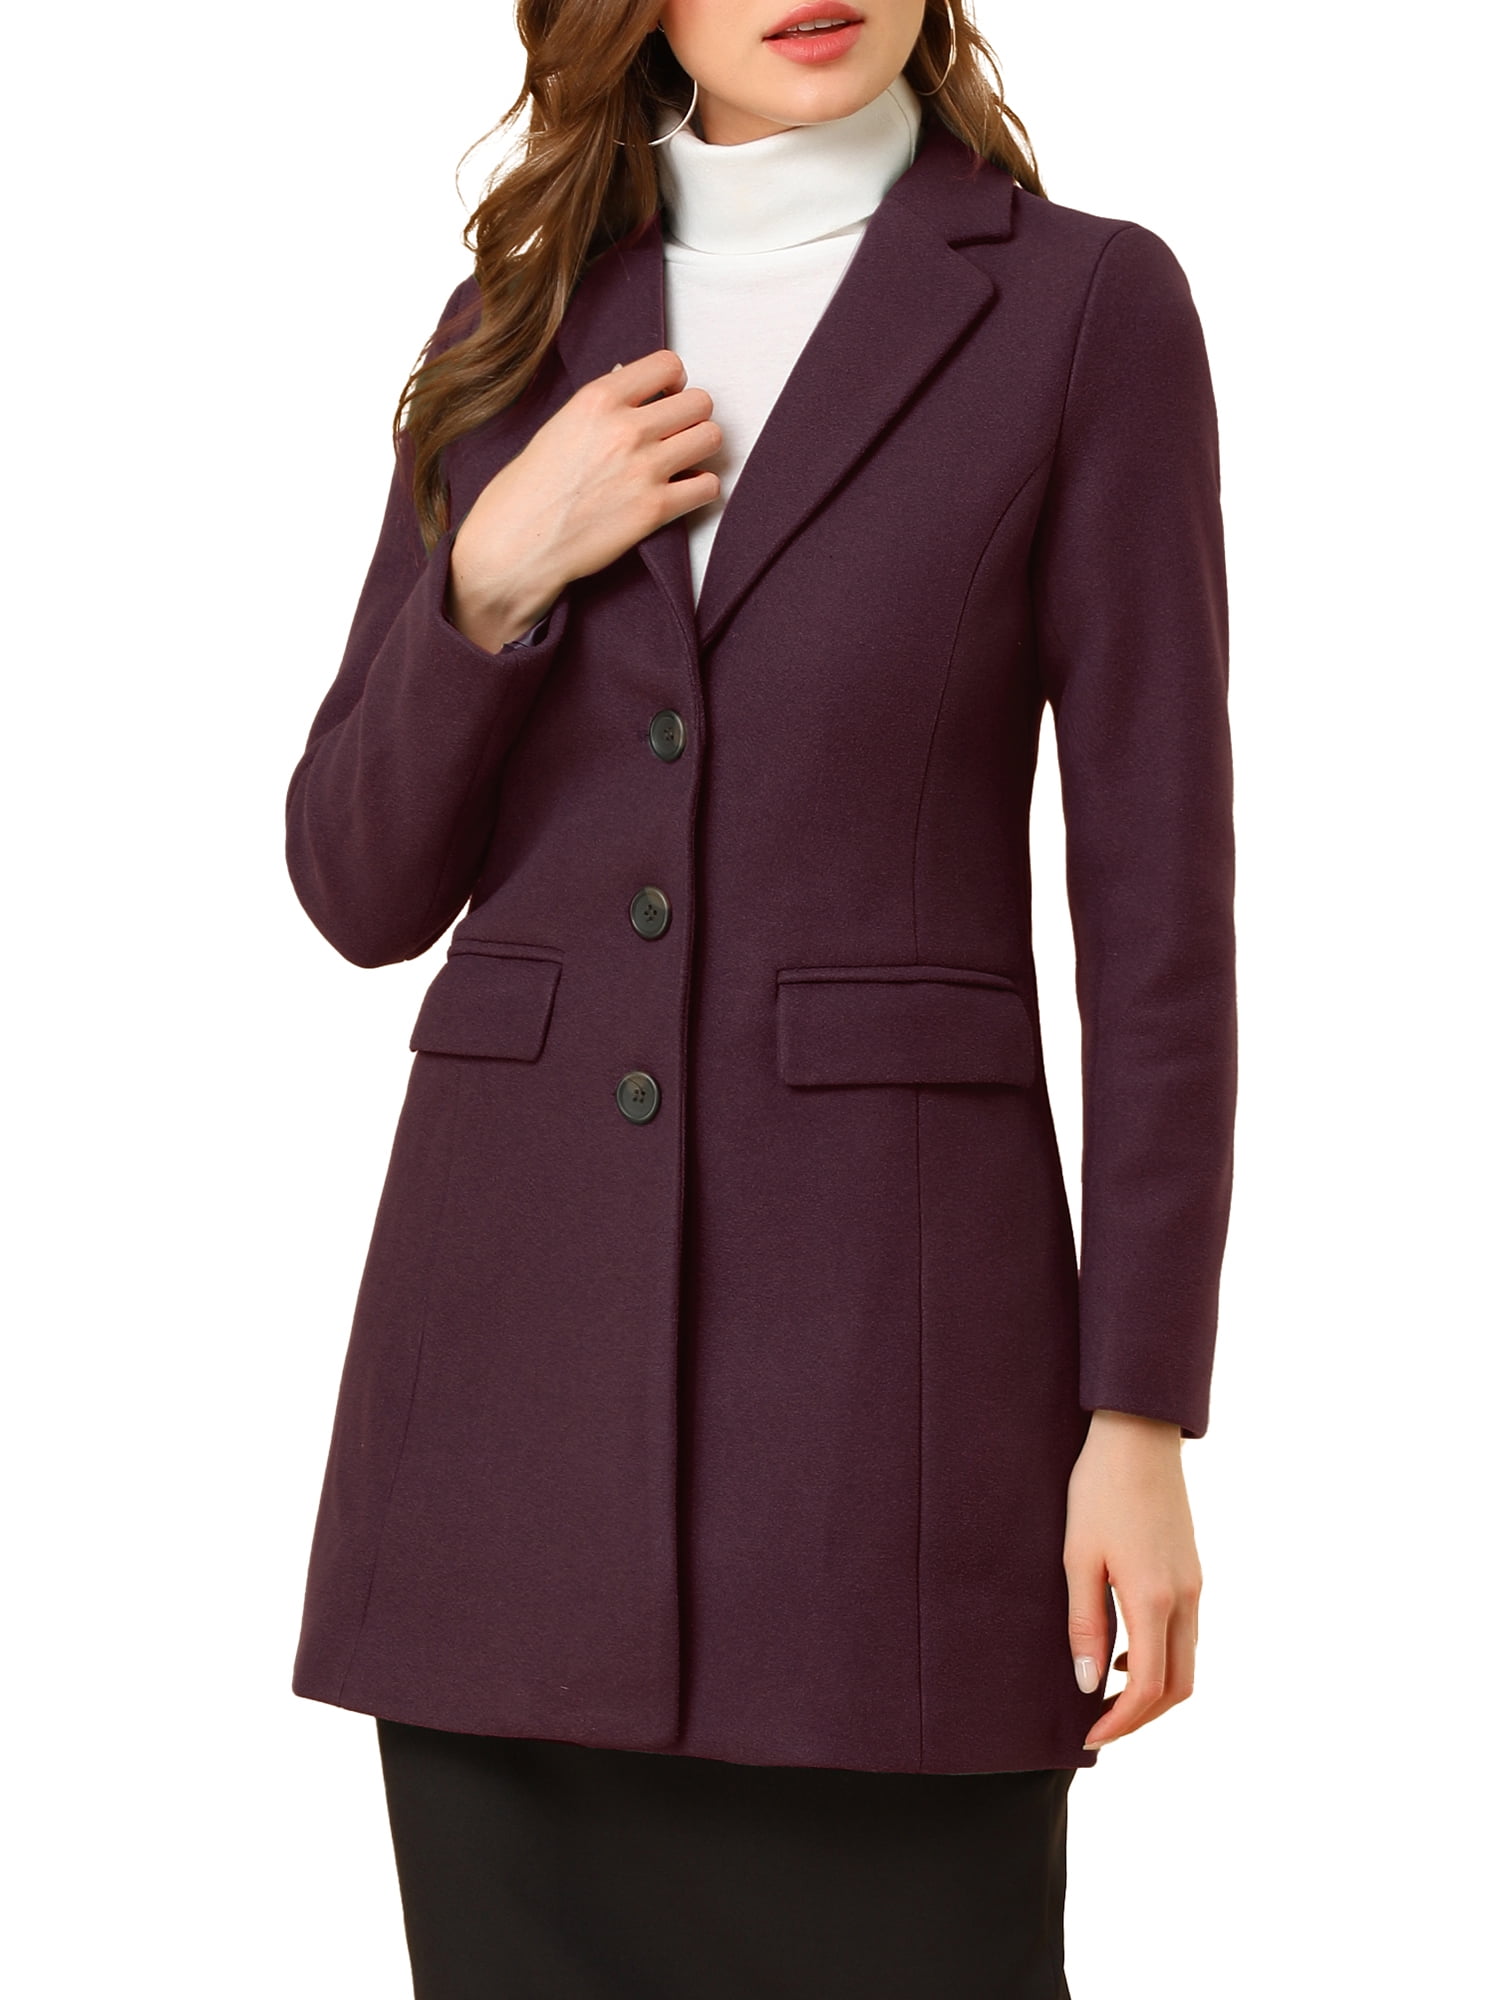 Allegra K Women/'s Single Breasted Shawl Collar Overcoat Belted Winter Coat